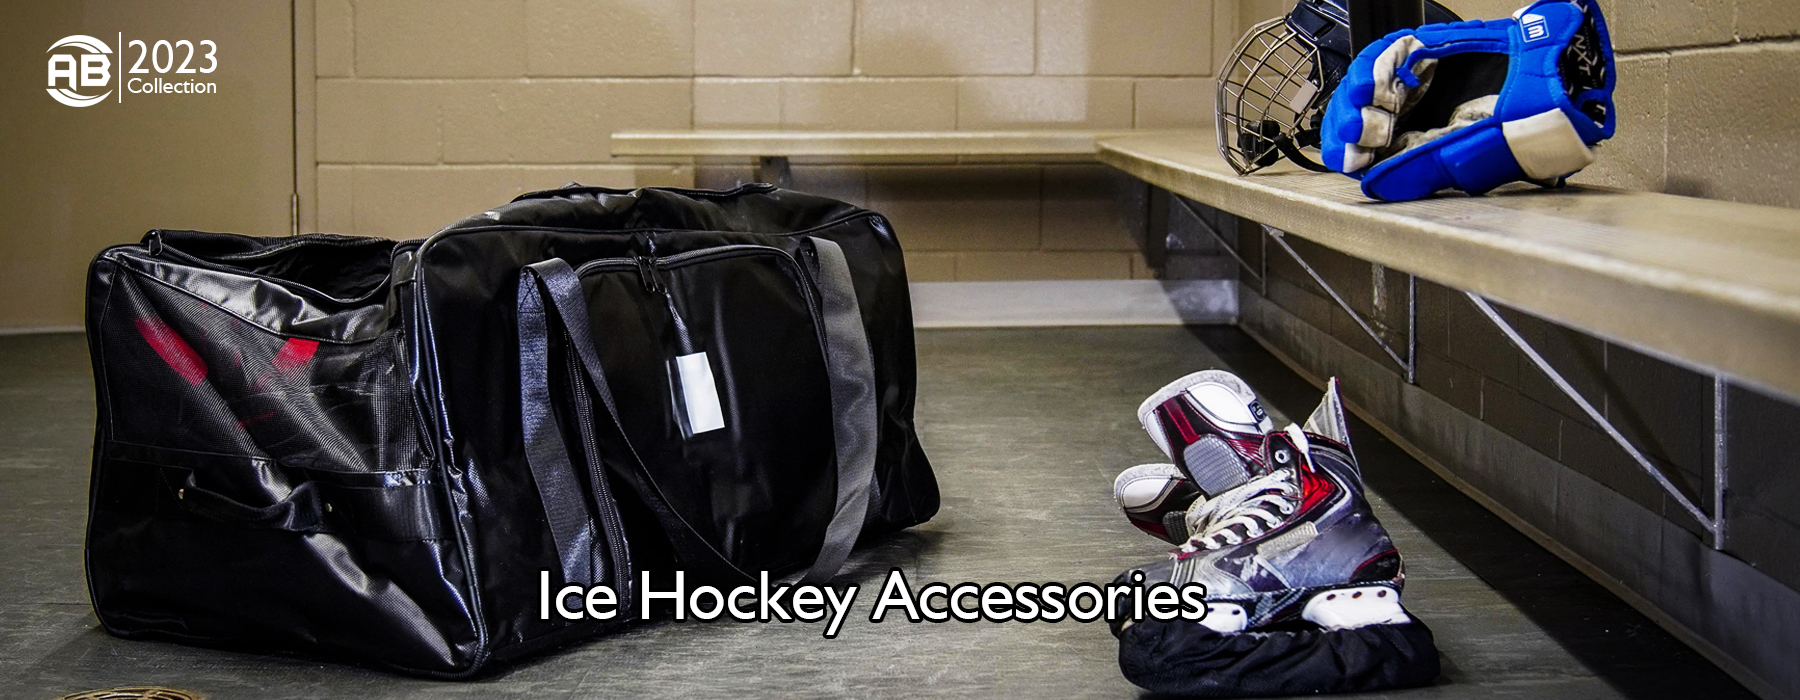 Ice Hockey Accessories